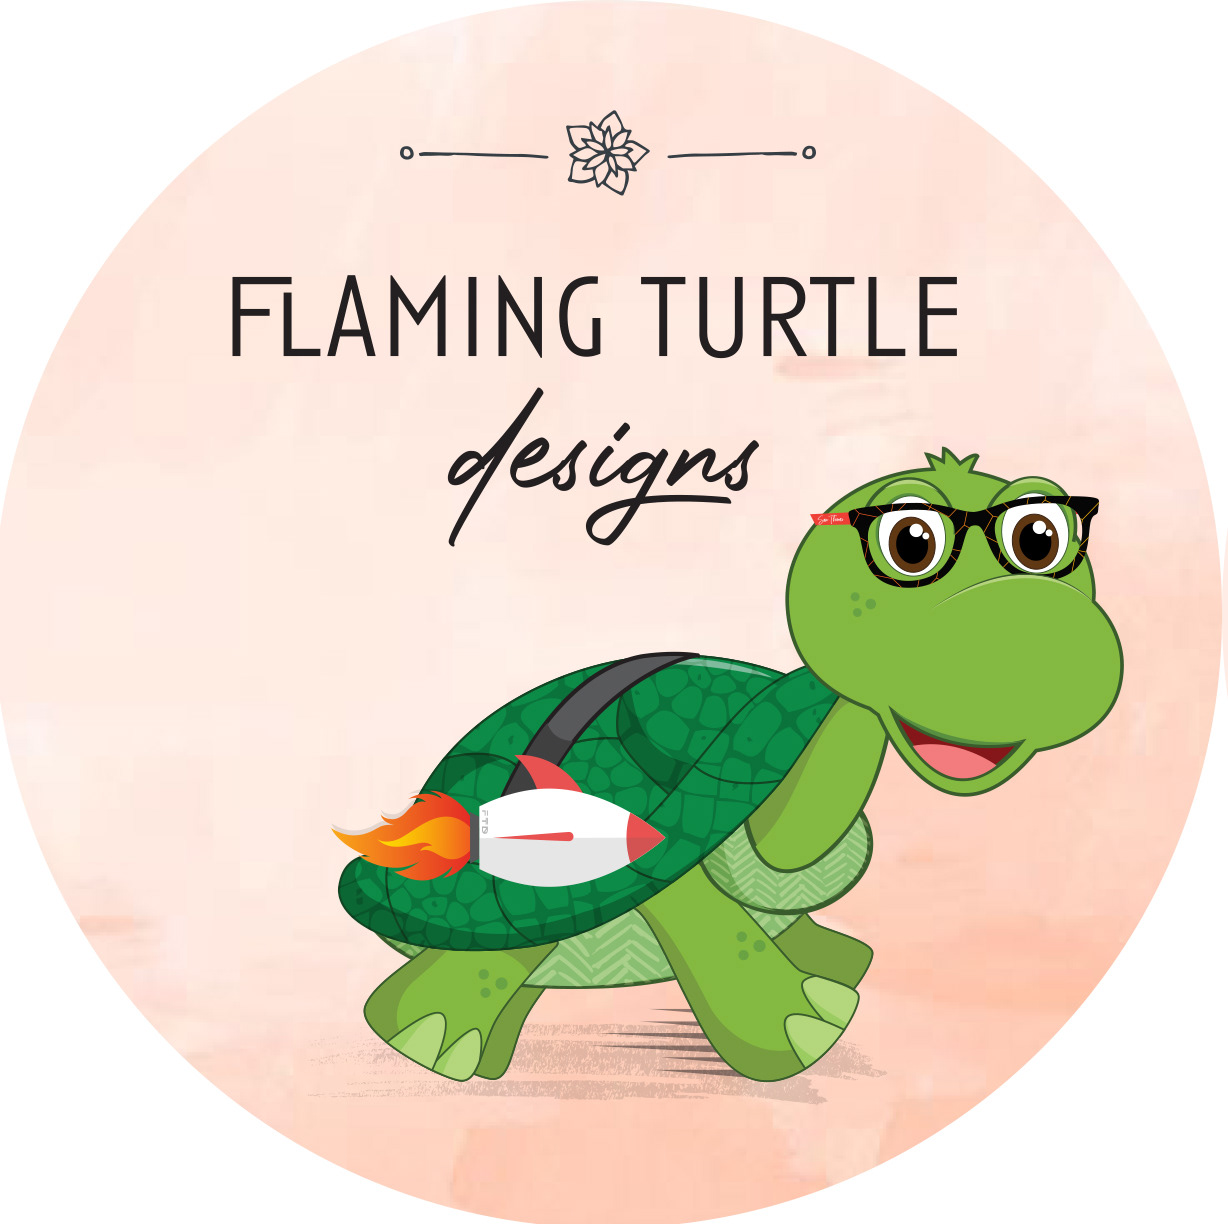 Flaming Turtle designs